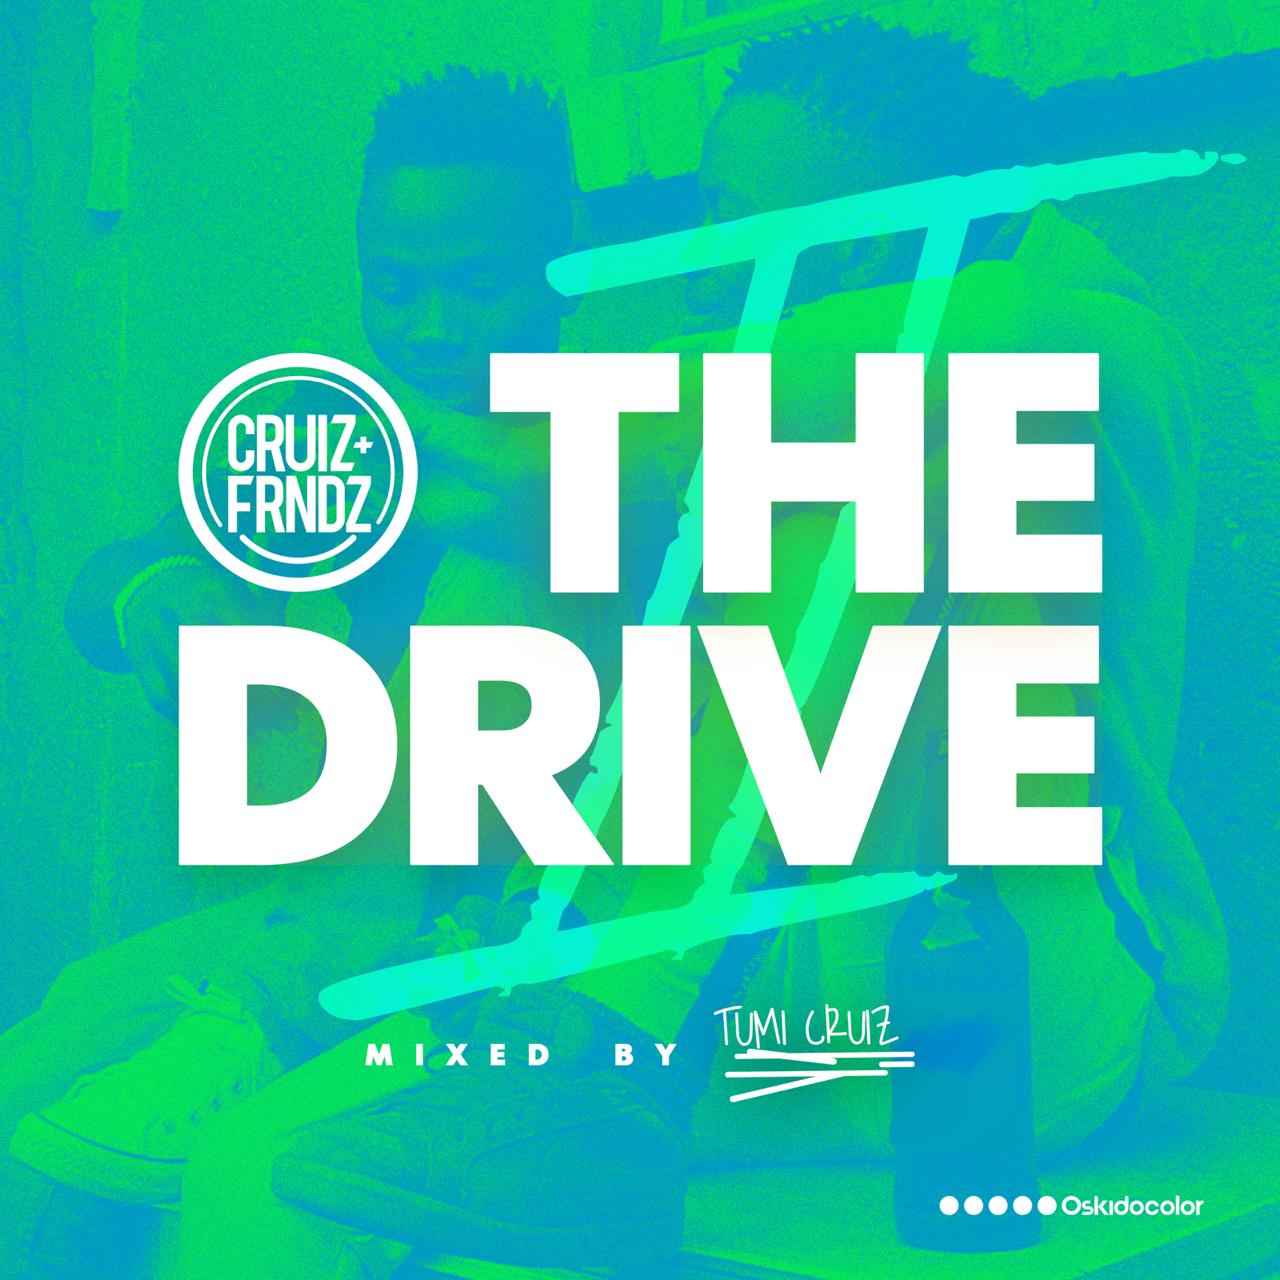 Tumi Cruiz The Drive Mix 2.